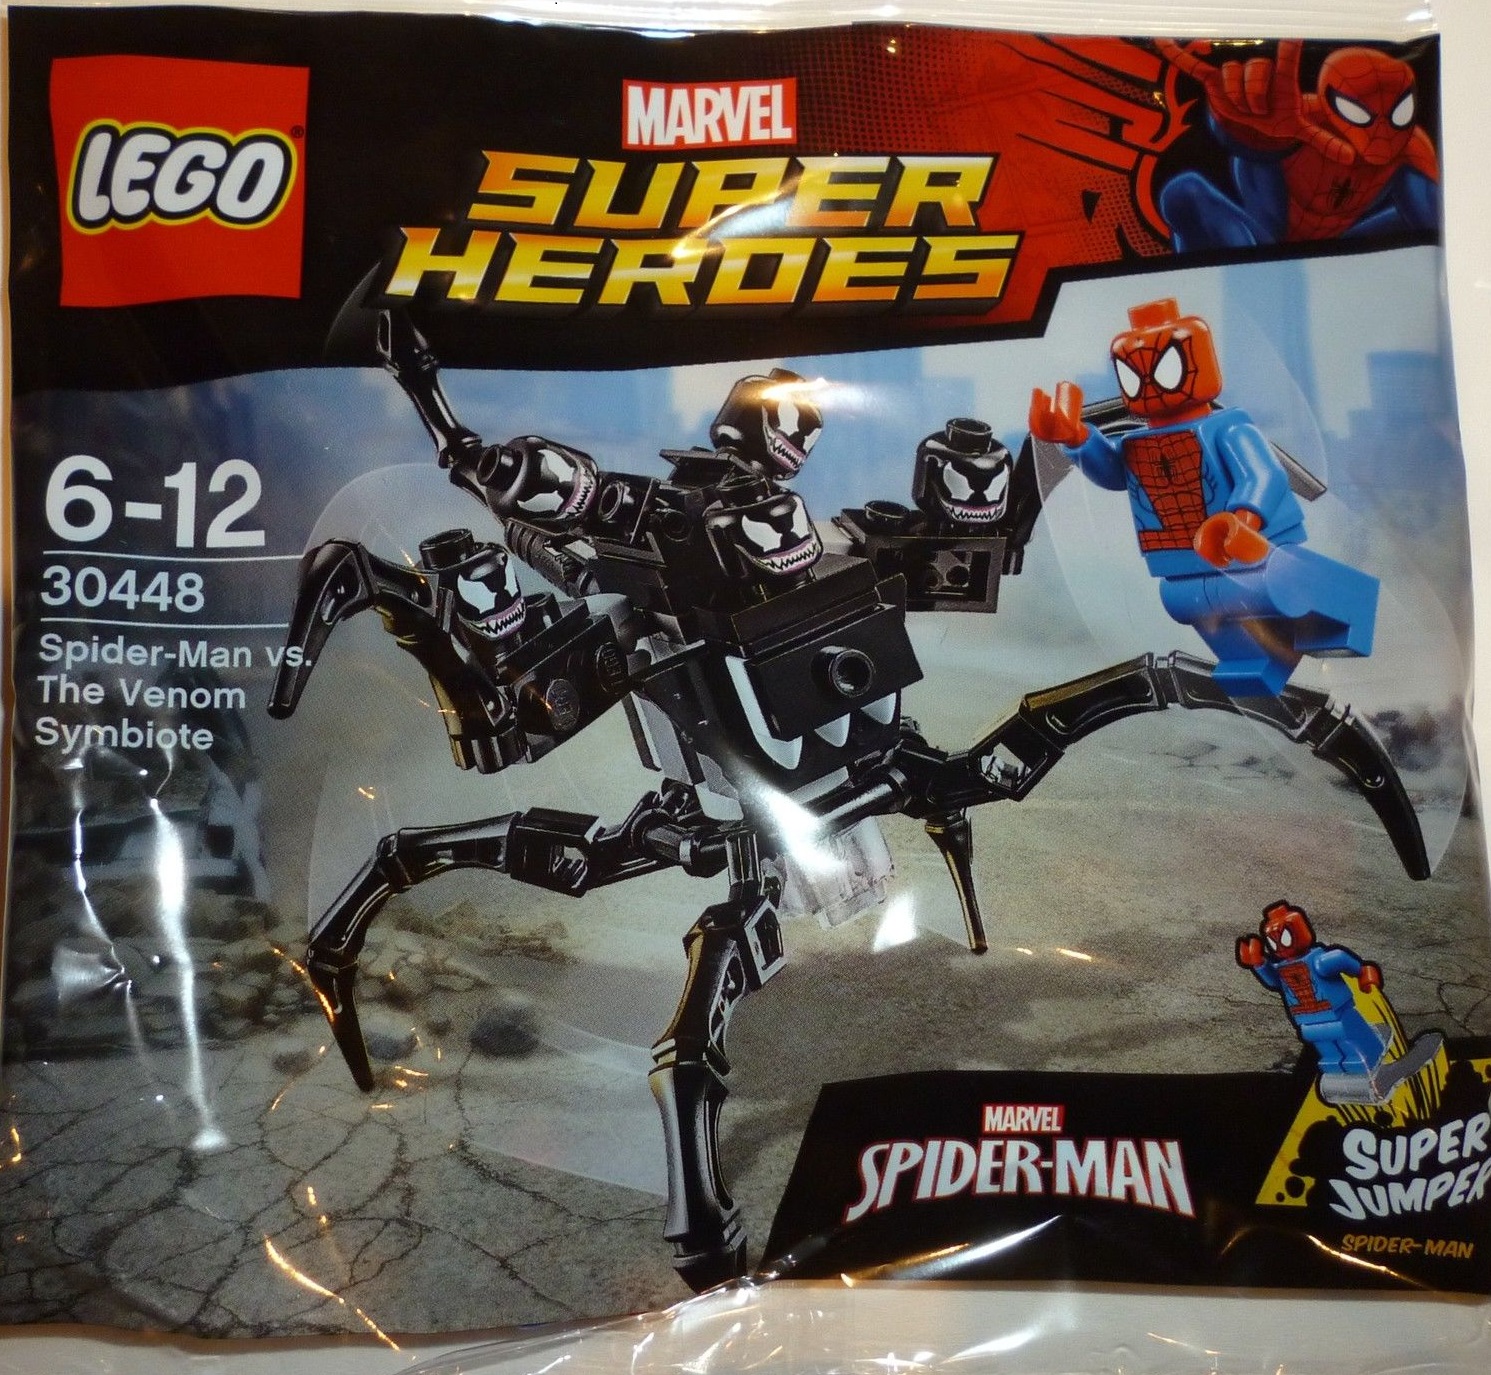 Lego 30448 Spiderman vs Super Heroes Venom Symbiote Polybag / Promo 